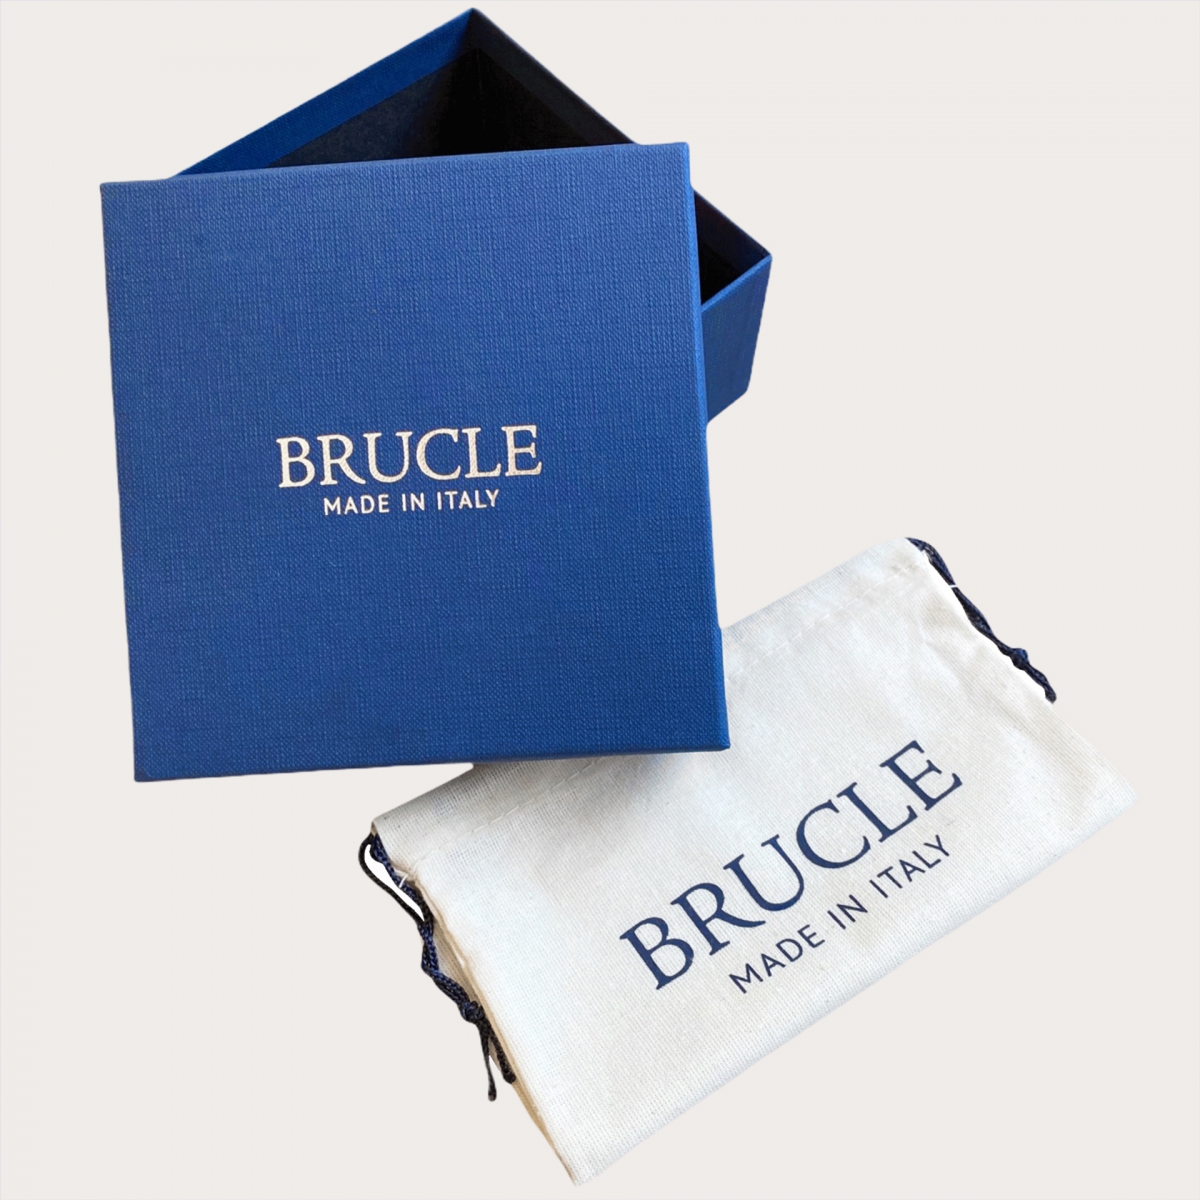 BRUCLE Dunkelbrauner Ledergürtel mit Elch-Print